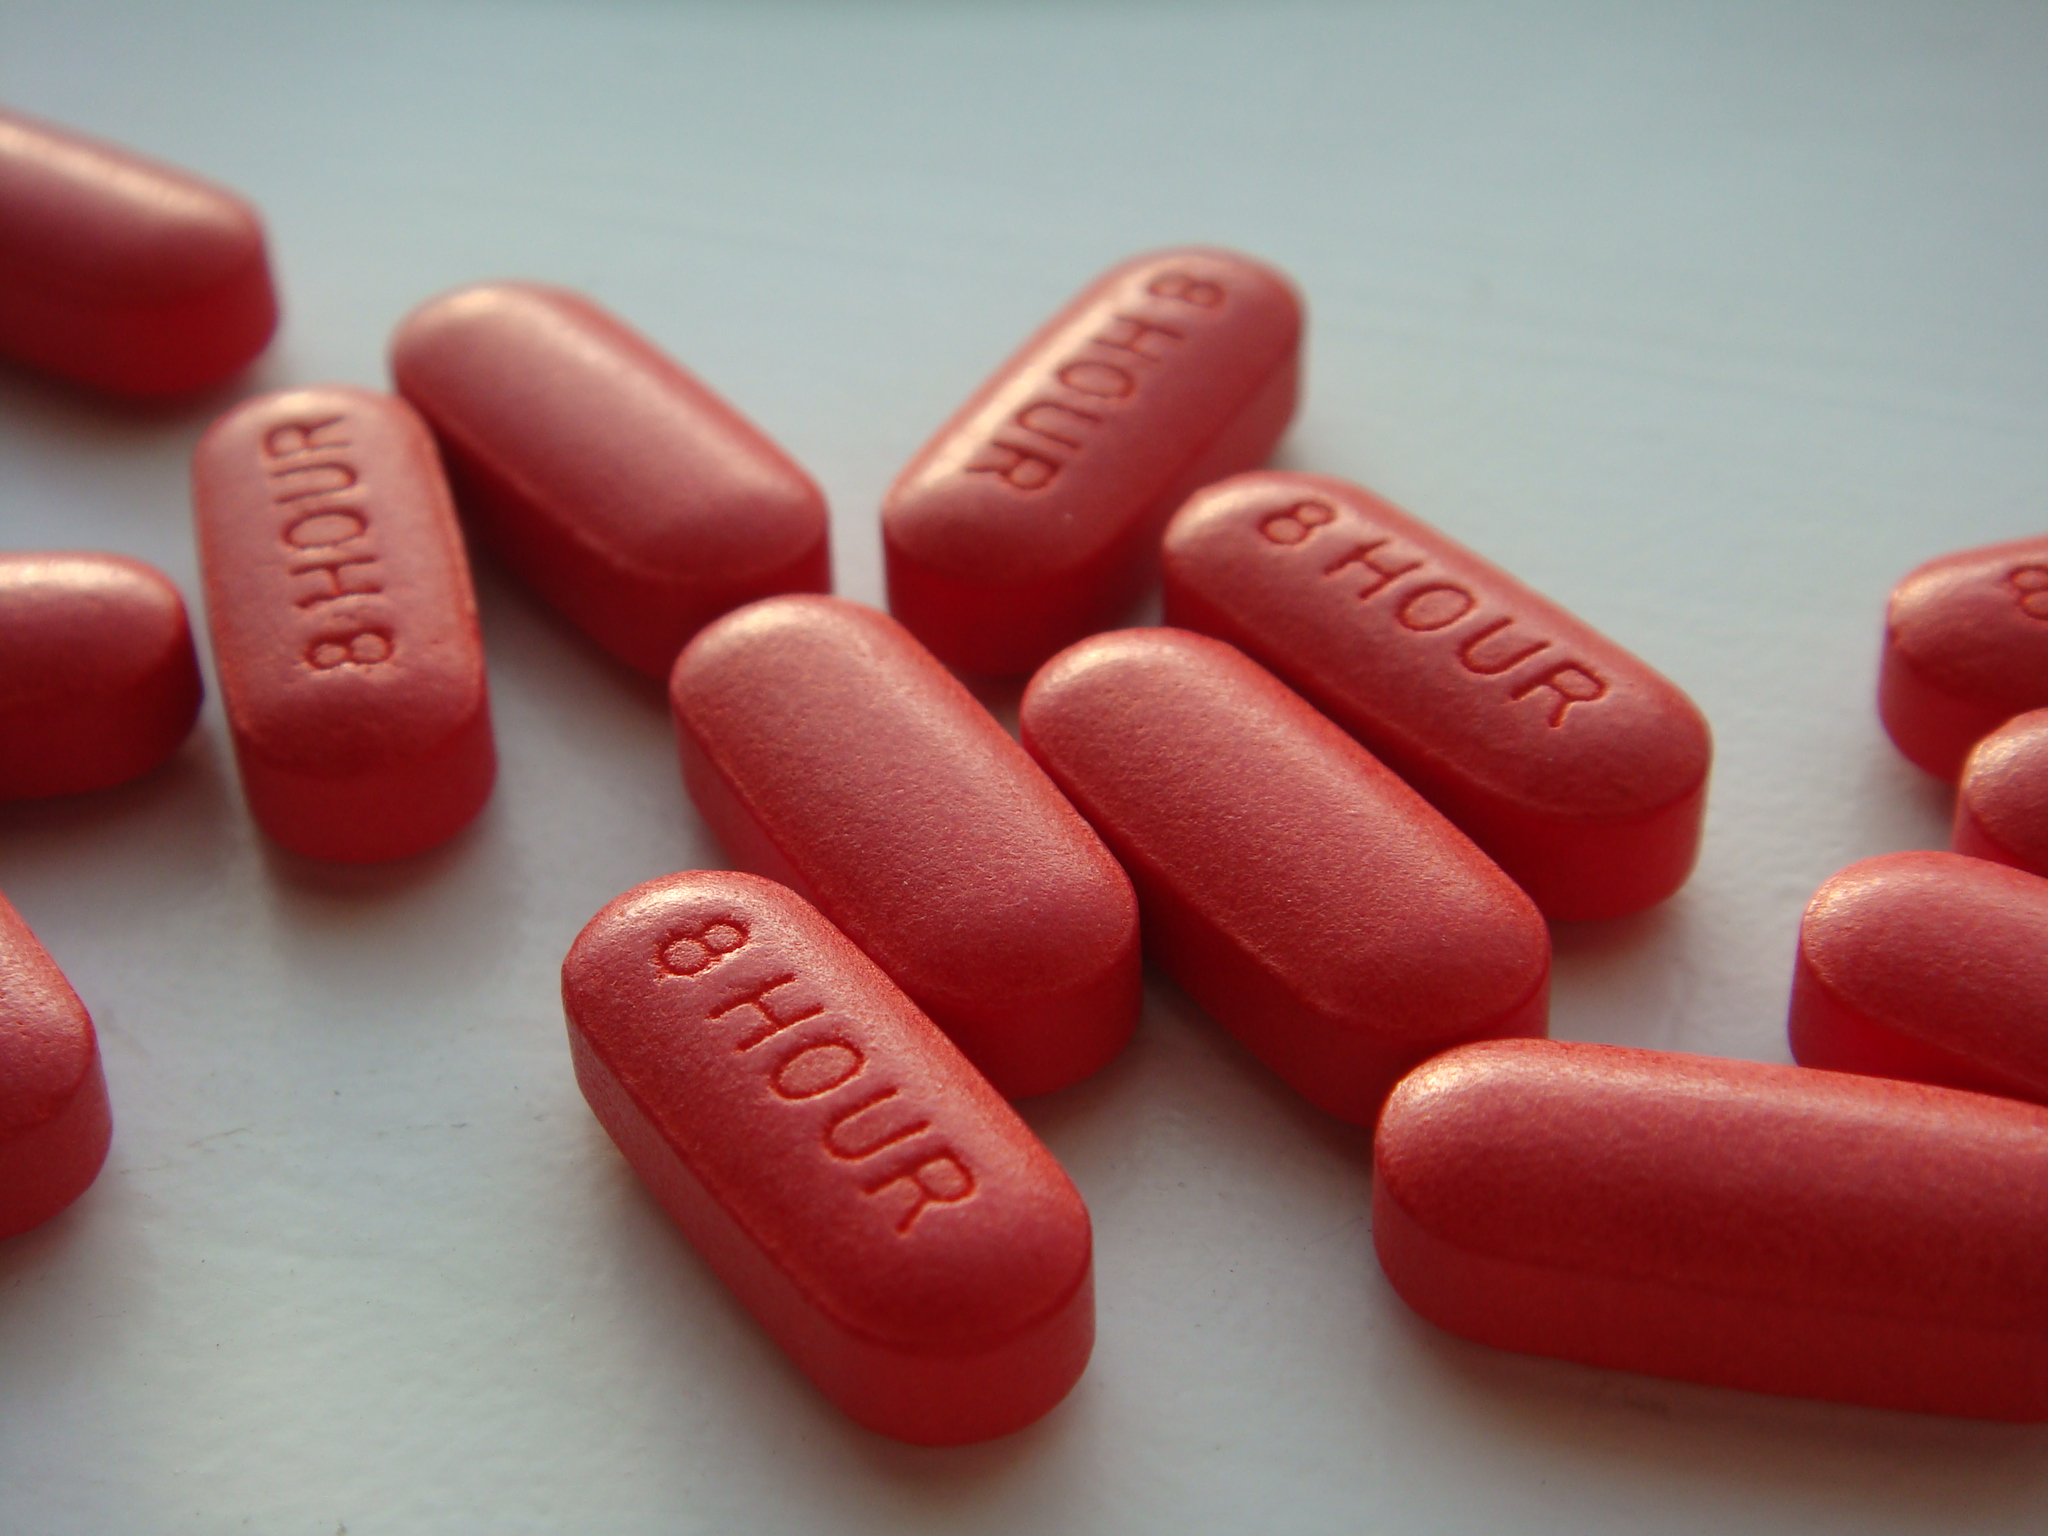 File:Tylenol 8 hour pills closeup.jpg - Wikimedia Commons